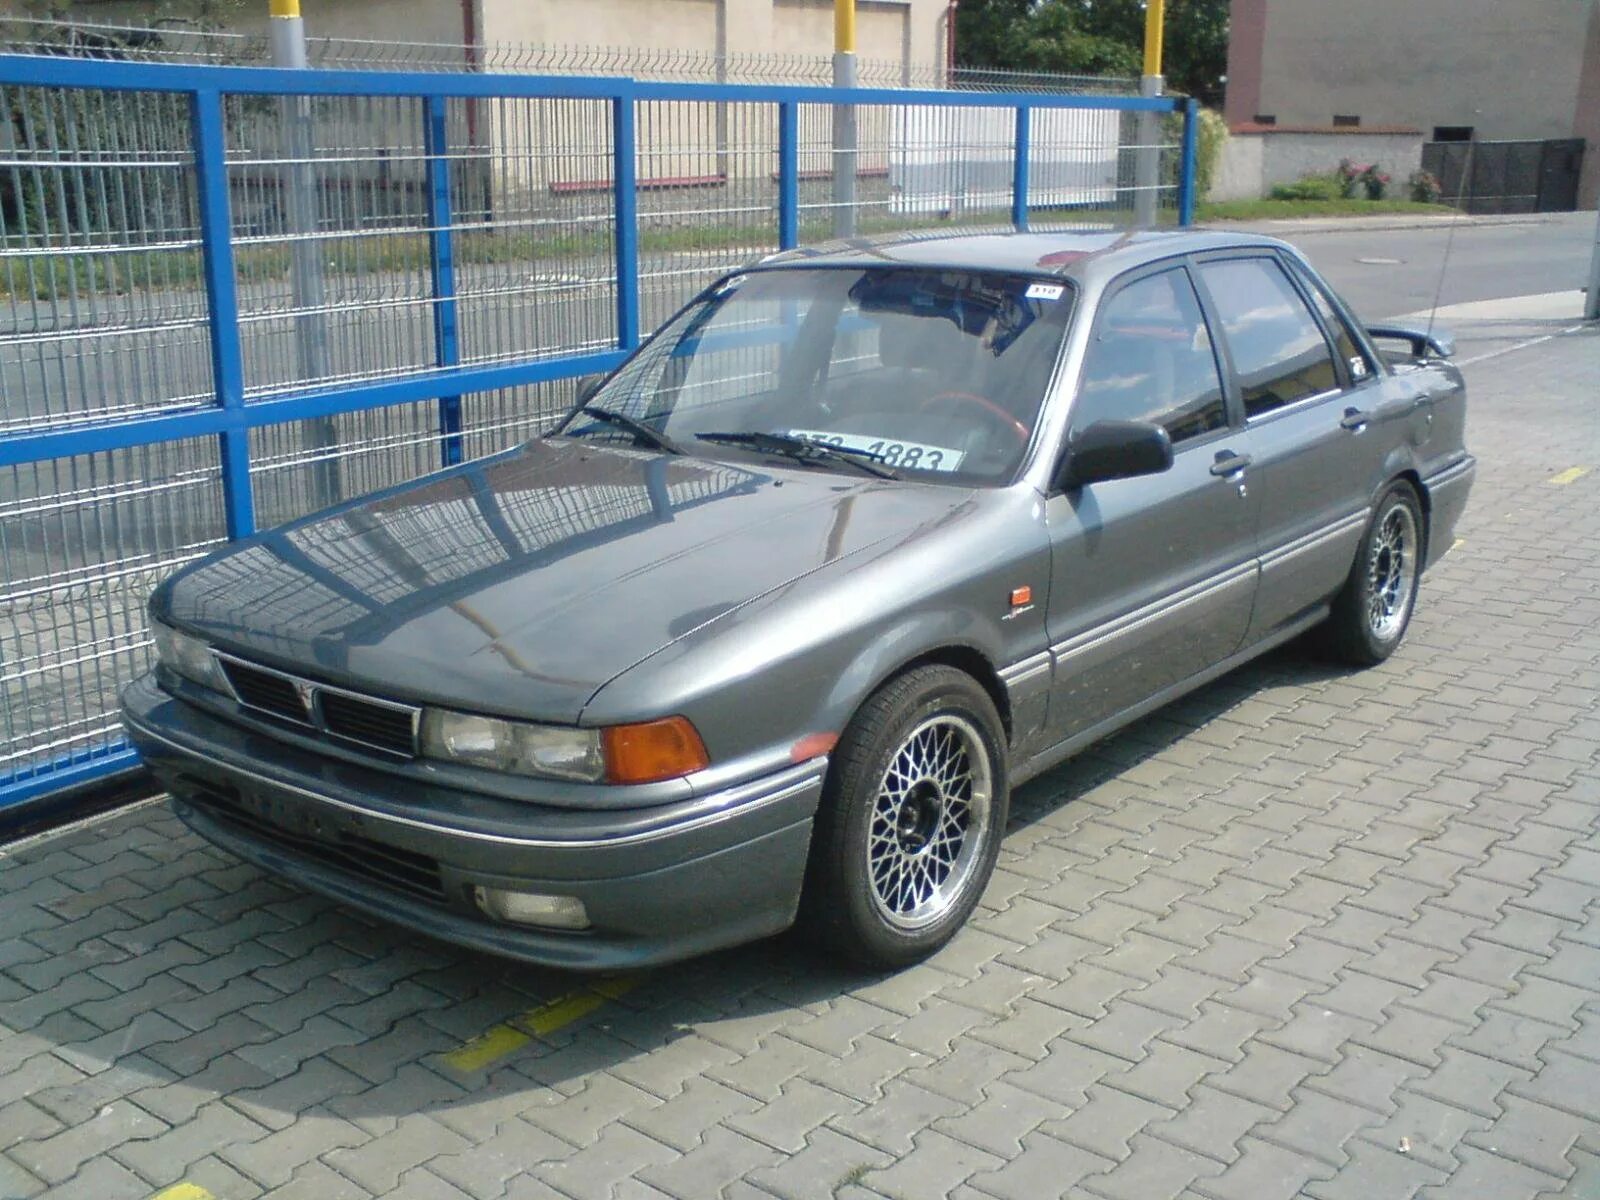 Mitsubishi 1992. Митсубиси Галант 1992. Мицубиси Галант, 1992 г.. Mitsubishi Galant 1992. Мицубиси Галант 6 1988-1992.